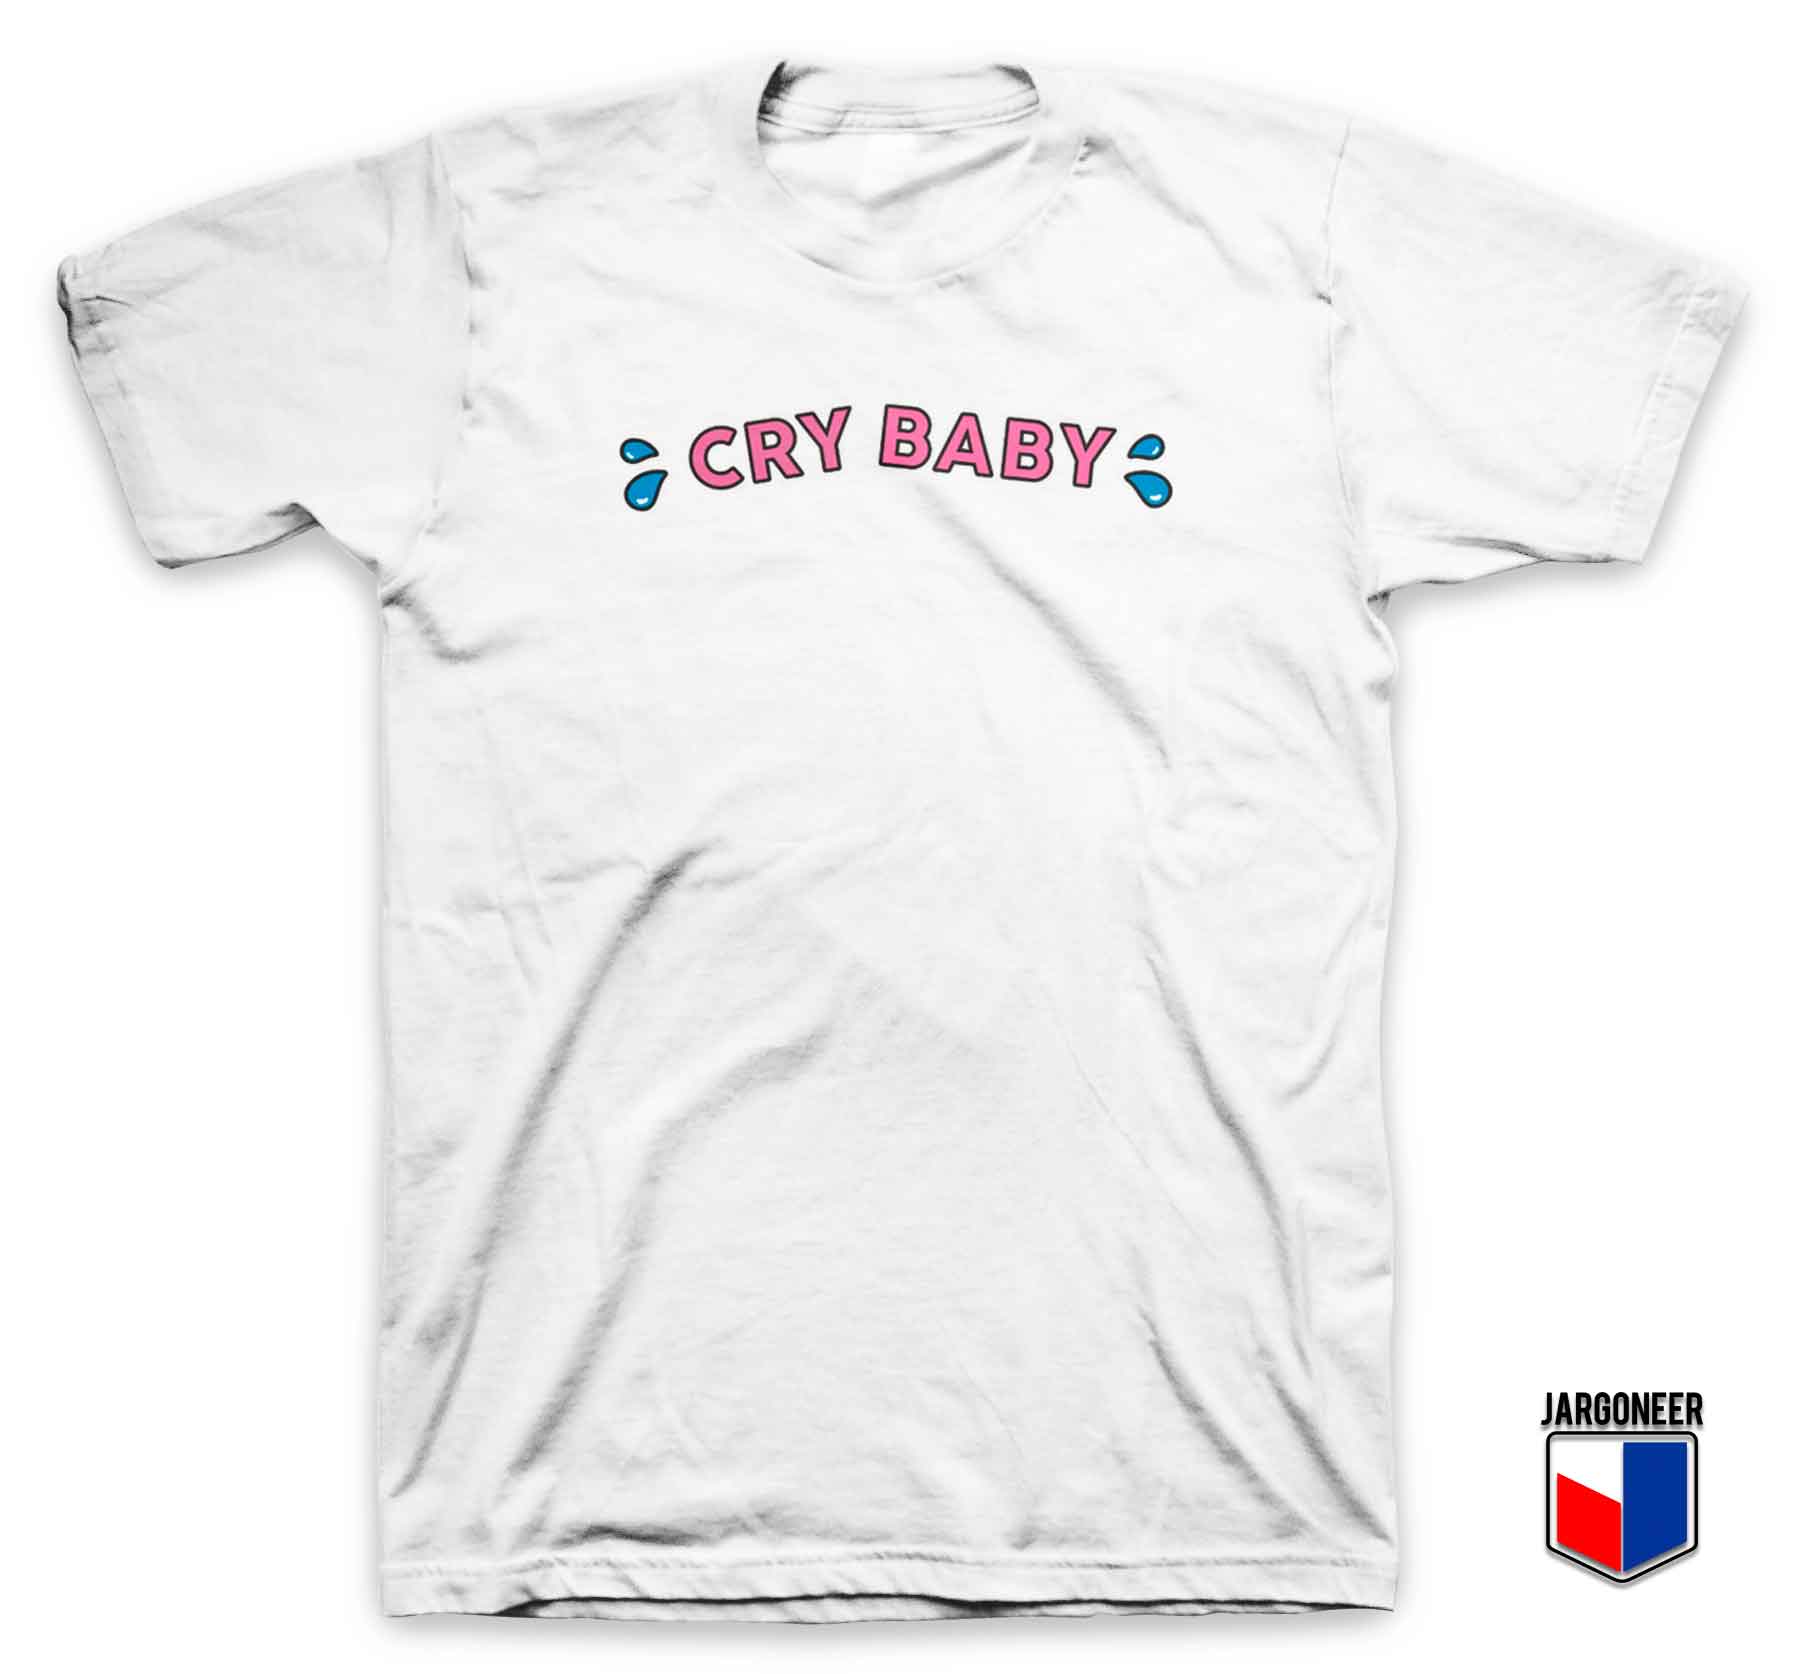 Cry Baby - Shop Unique Graphic Cool Shirt Designs